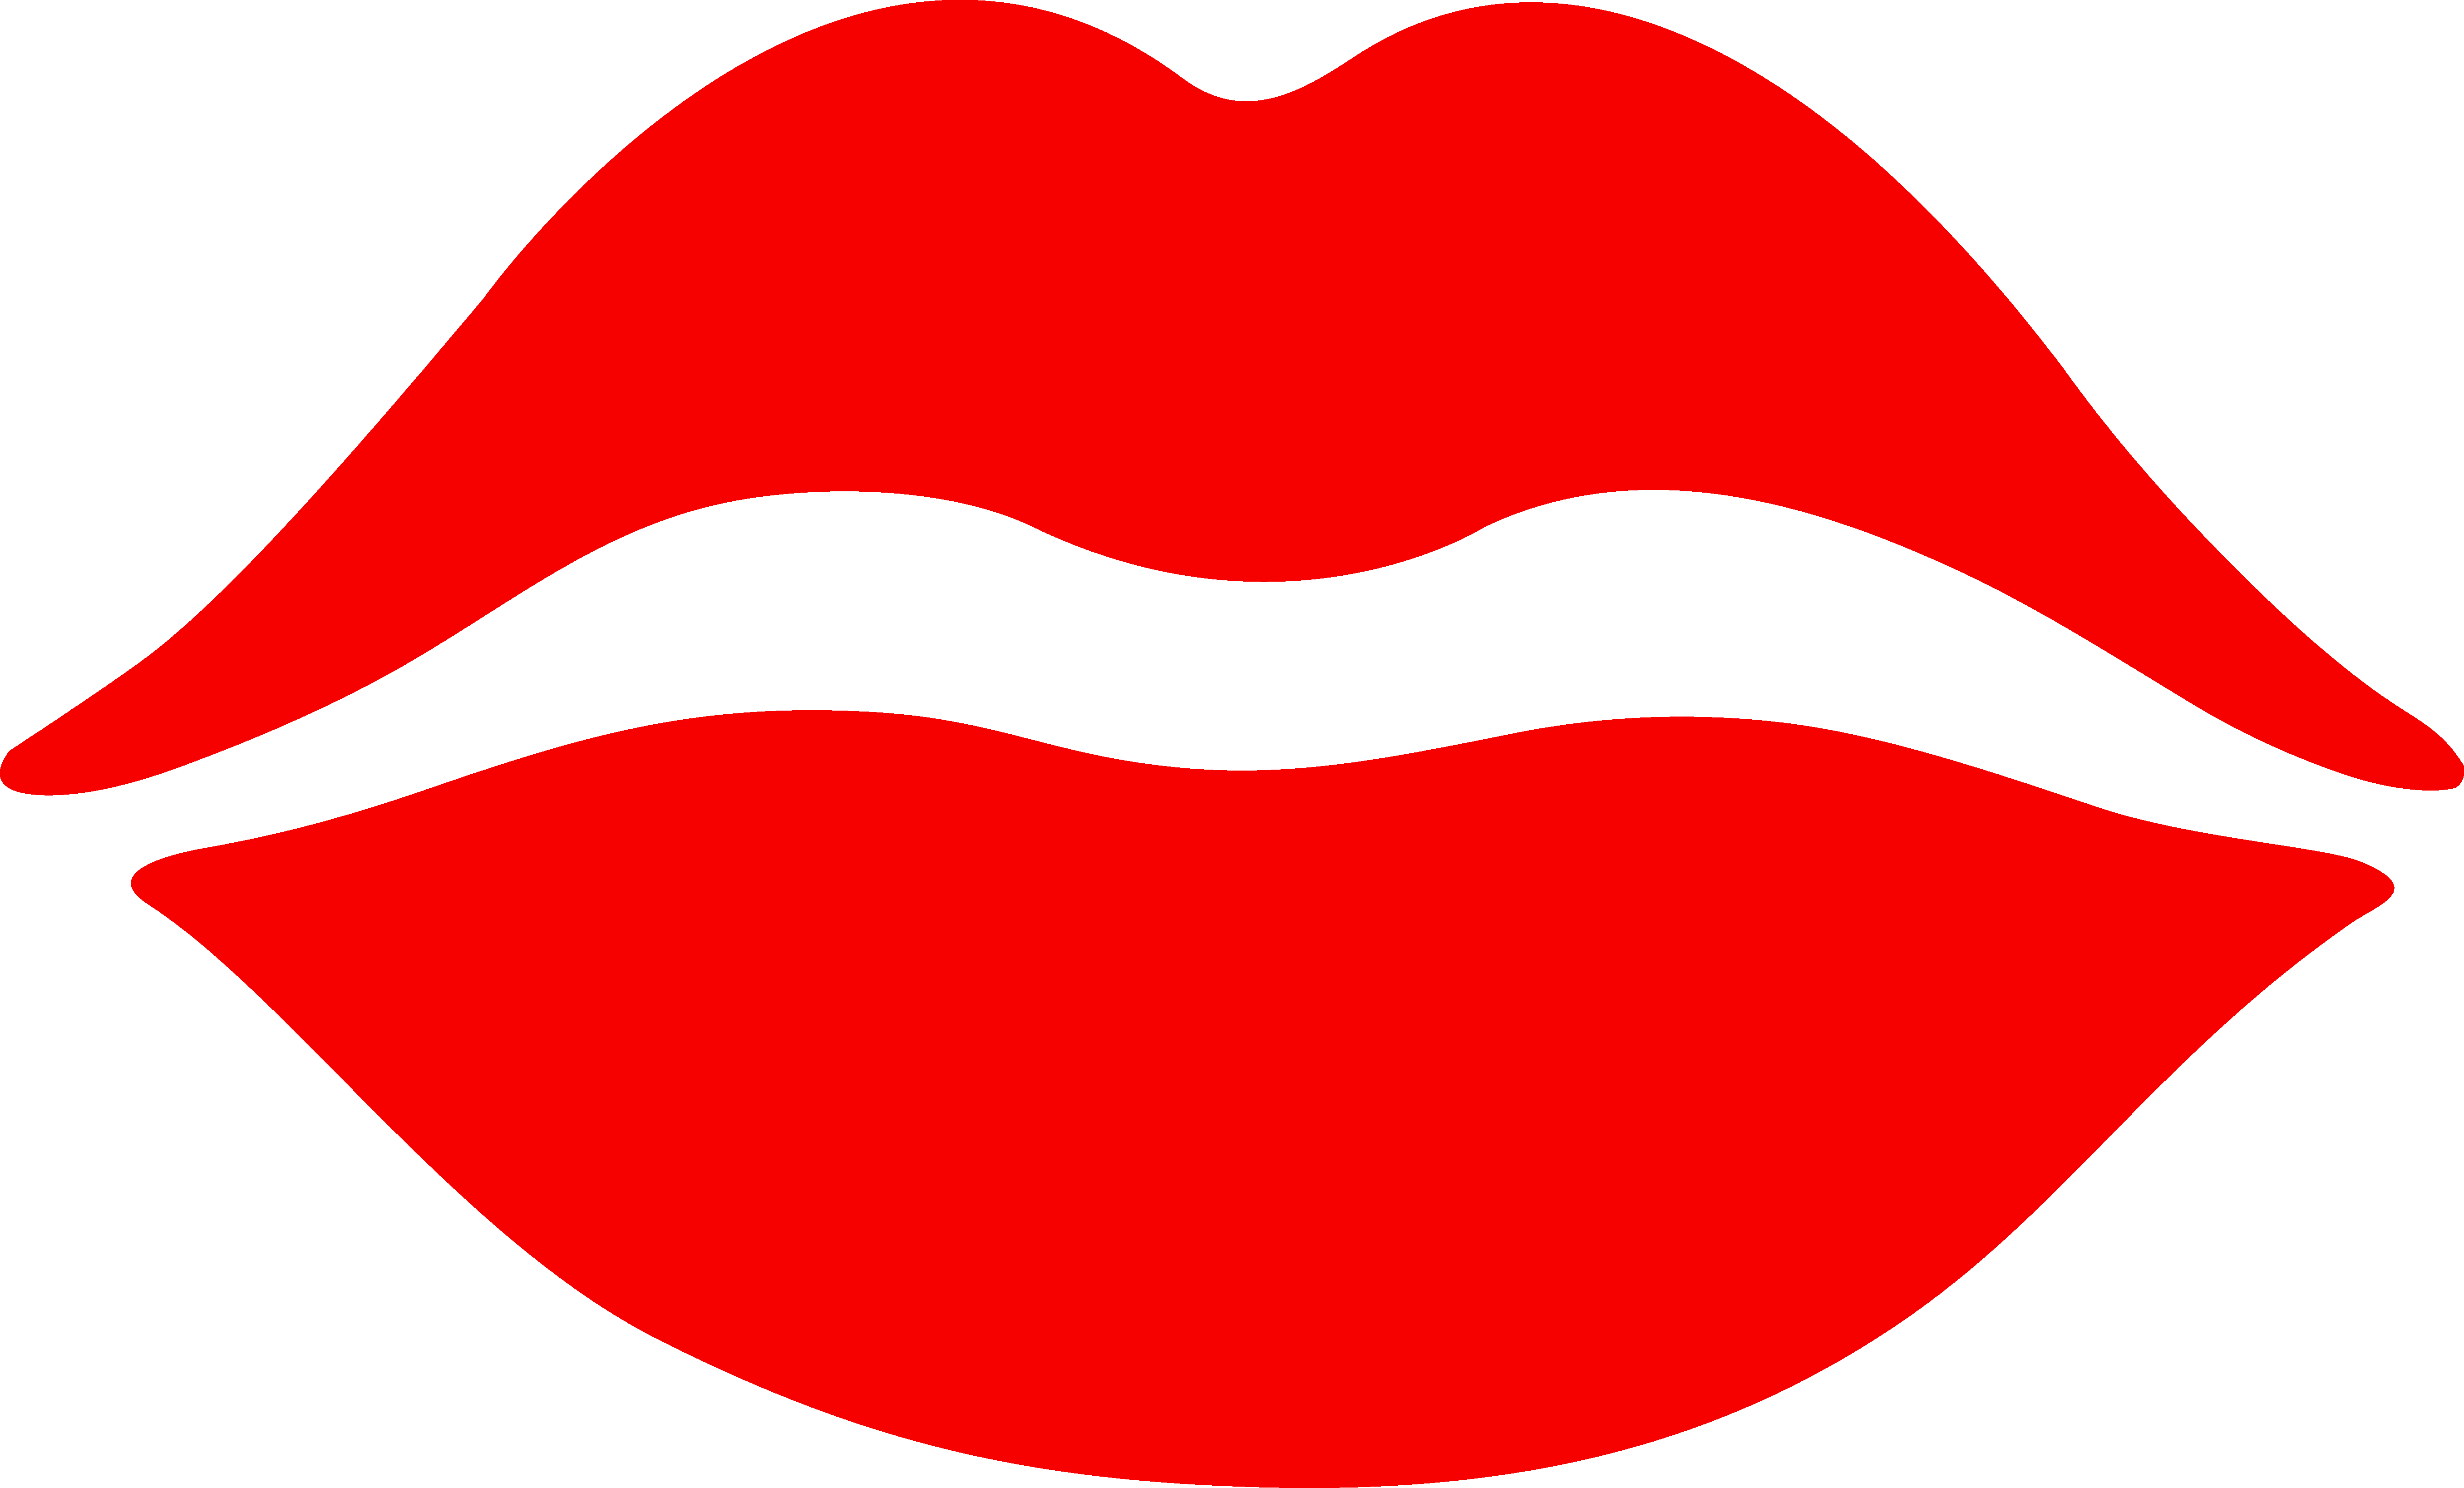 Lips Clip Art Free Kiss | Clipart Panda - Free Clipart Images